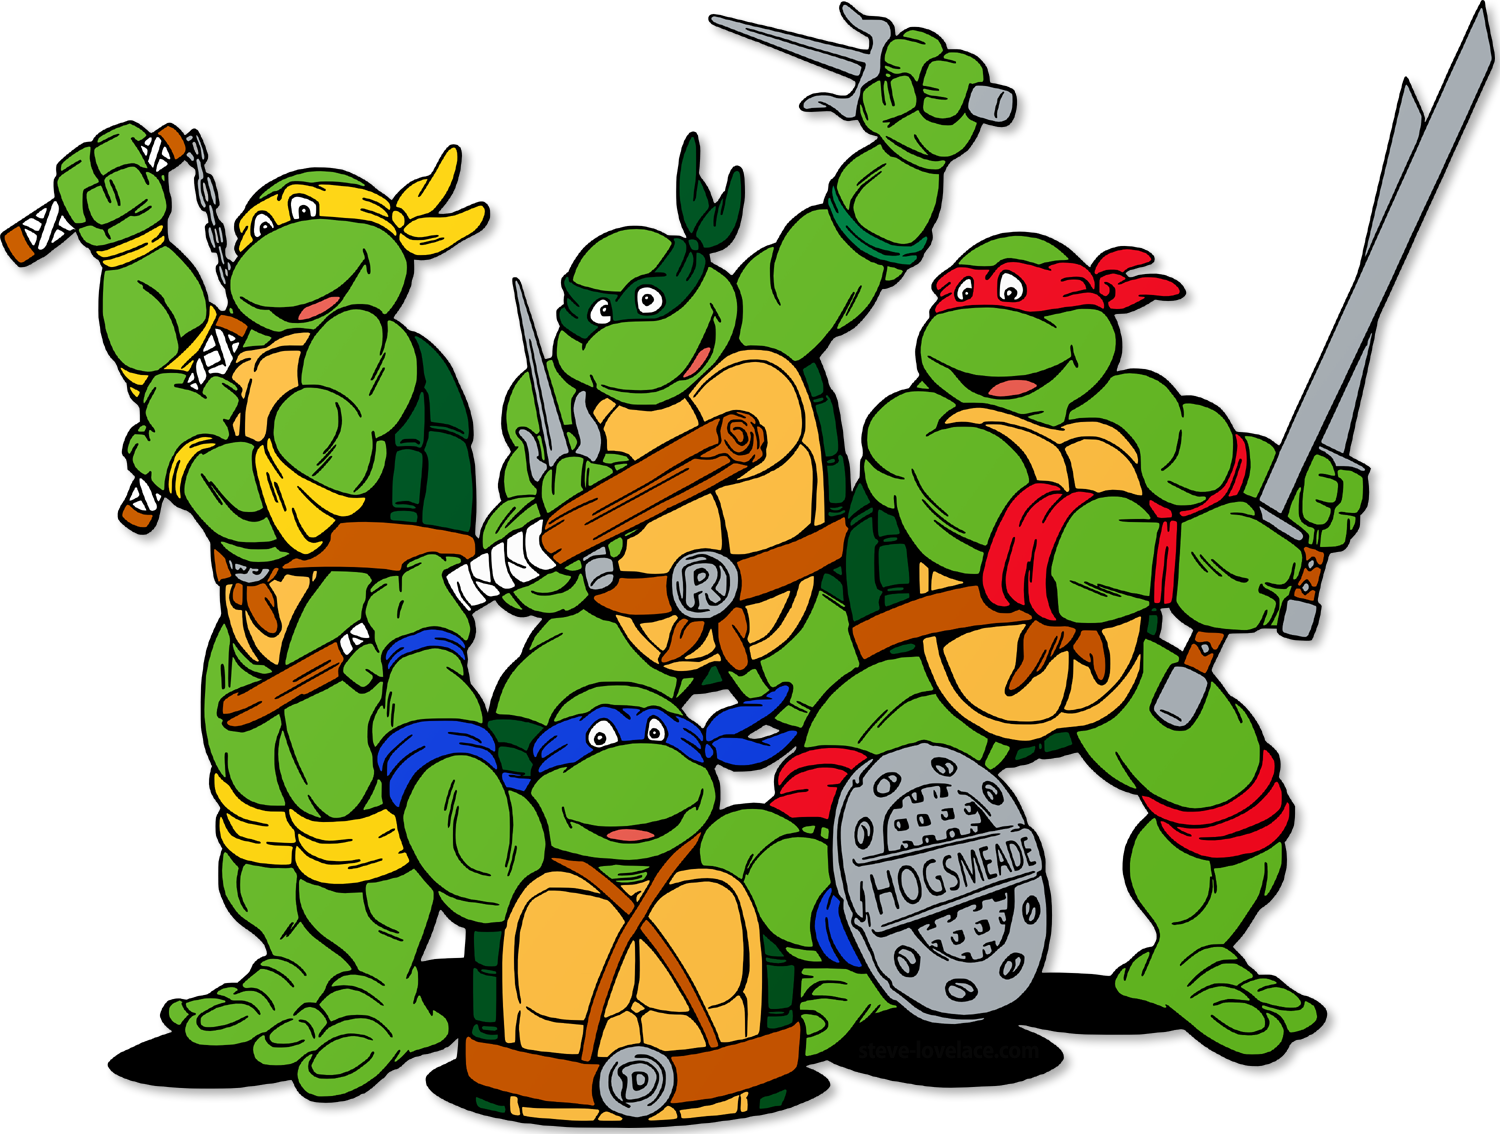 Free Teenage Mutant Ninja Turtles Logo Png, Download Free Clip Art, Free Clip Art on Clipart Library